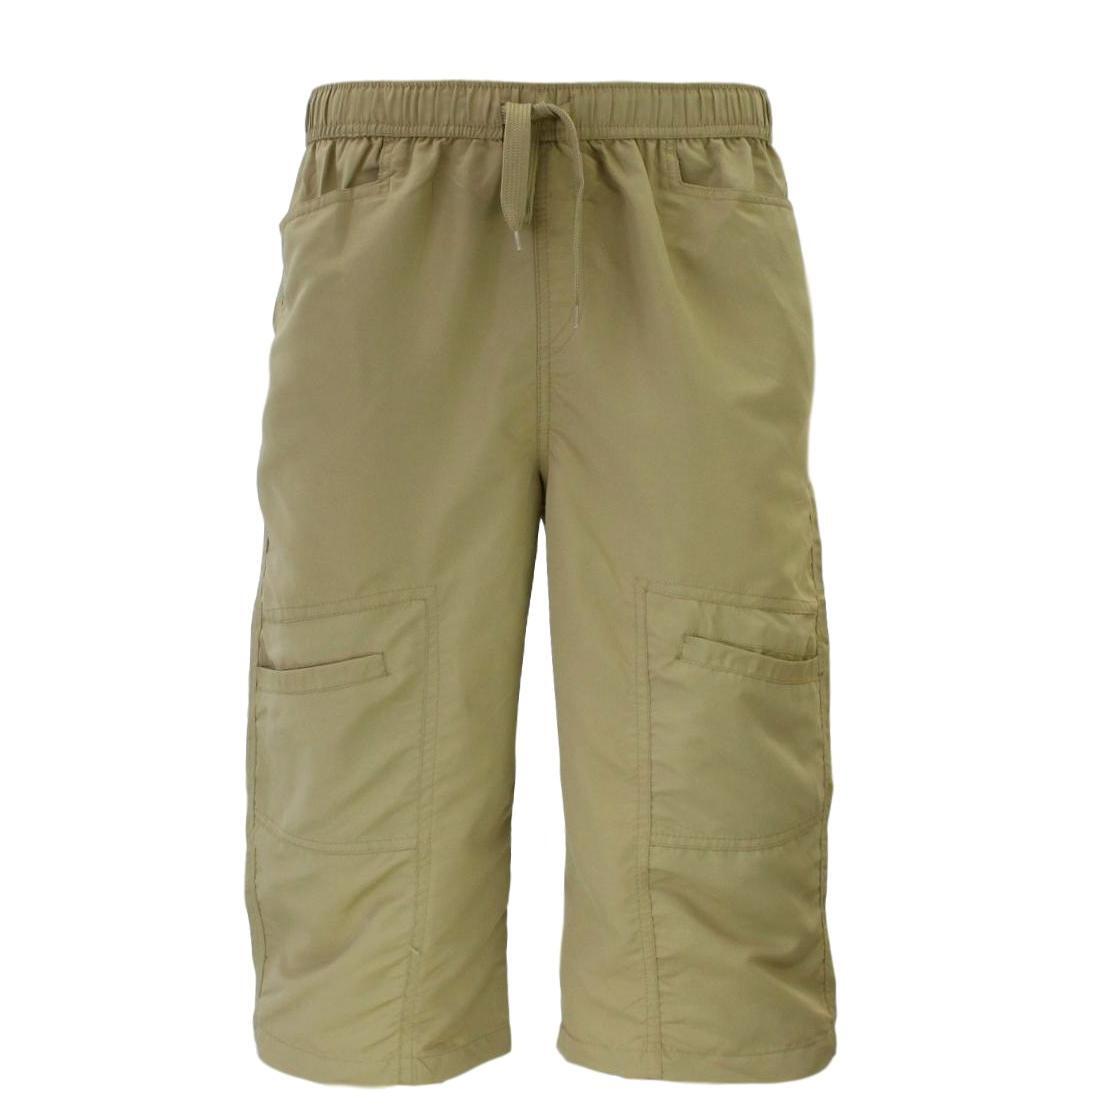 Mens 3 4 Cargo Long Shorts Multi Pocket Elastic Waist Drawstring Ebay